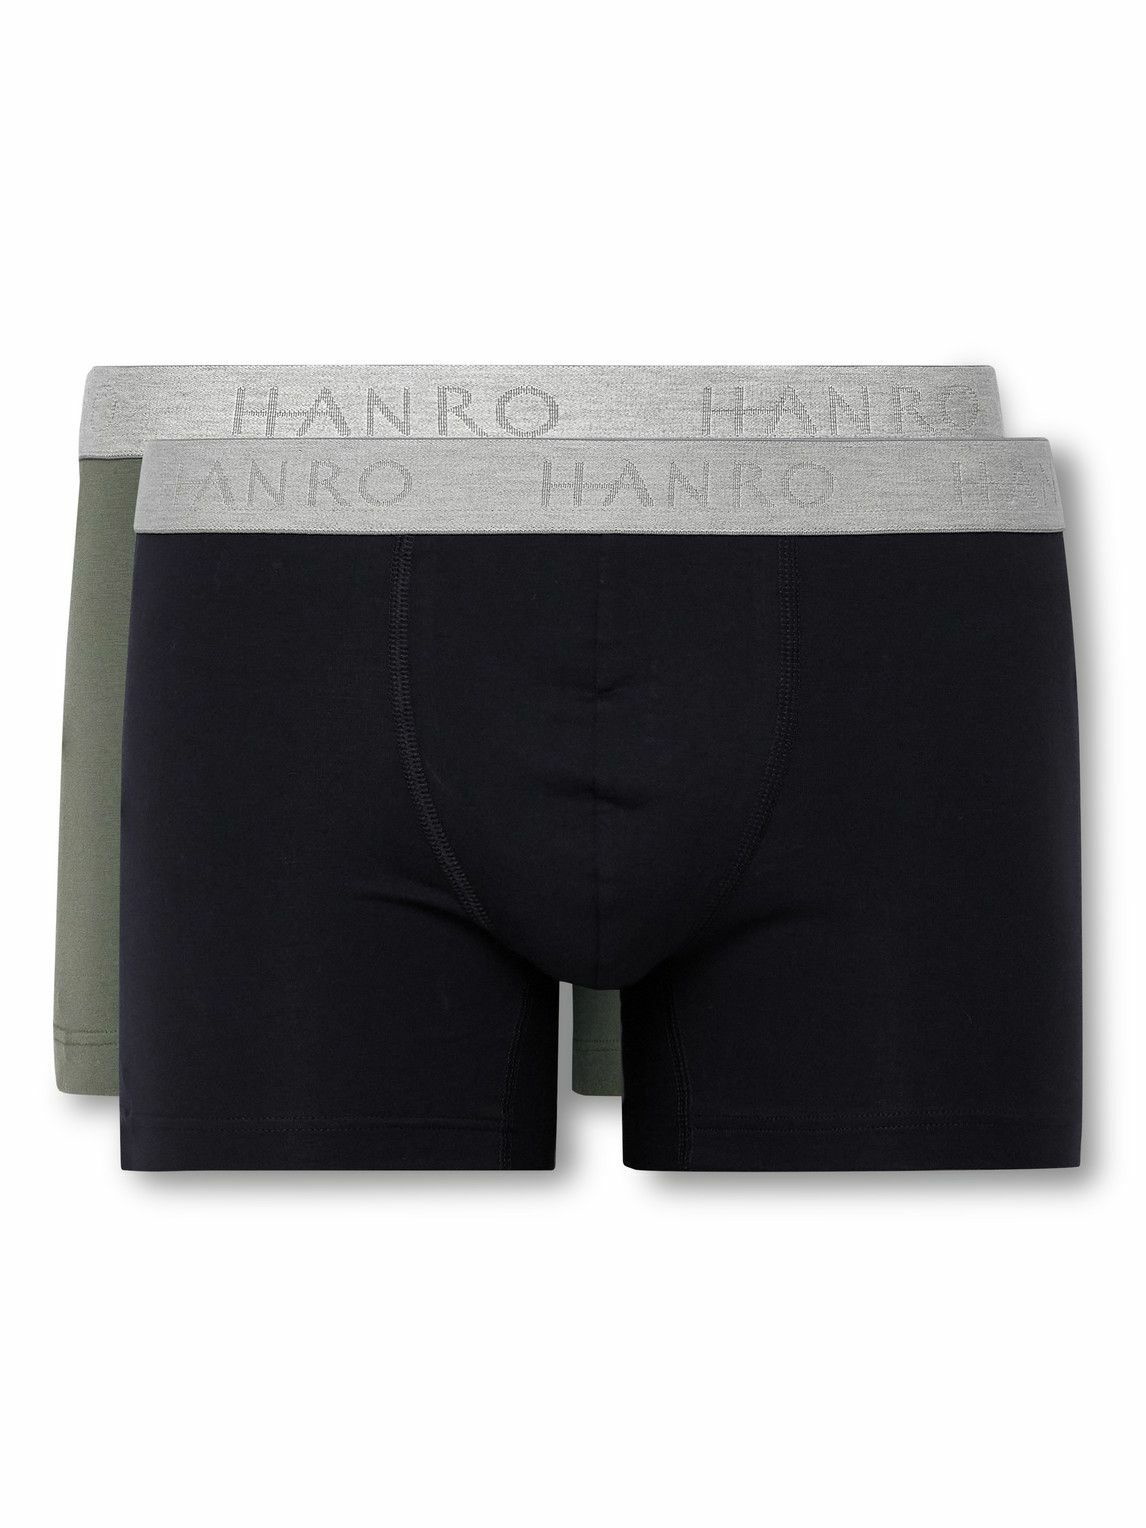 HANRO Essentials Two-Pack Stretch-Cotton Boxer Briefs for Men